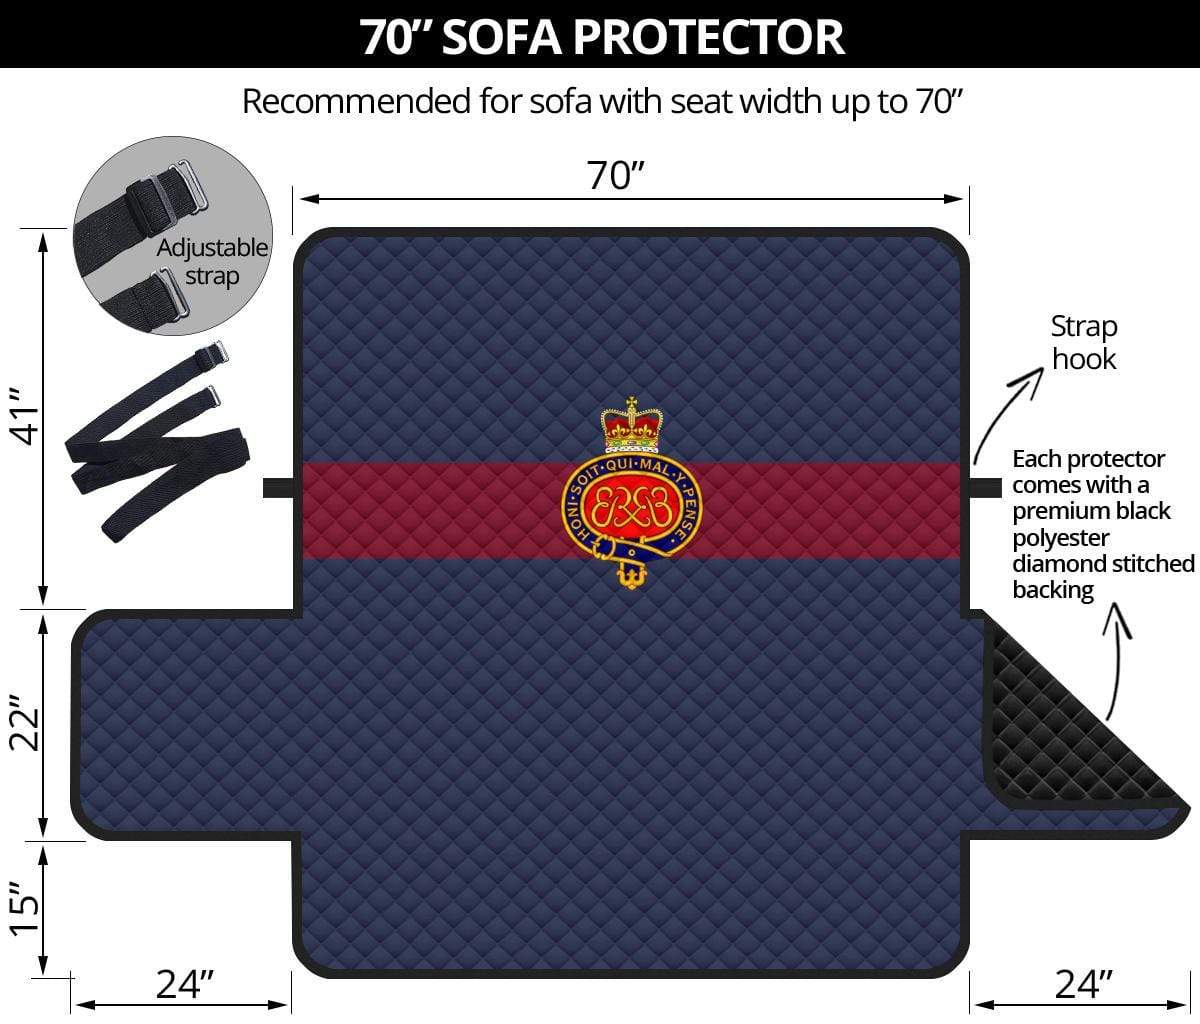 sofa protector 70" Grenadier Guards 3-Seat Sofa Protector